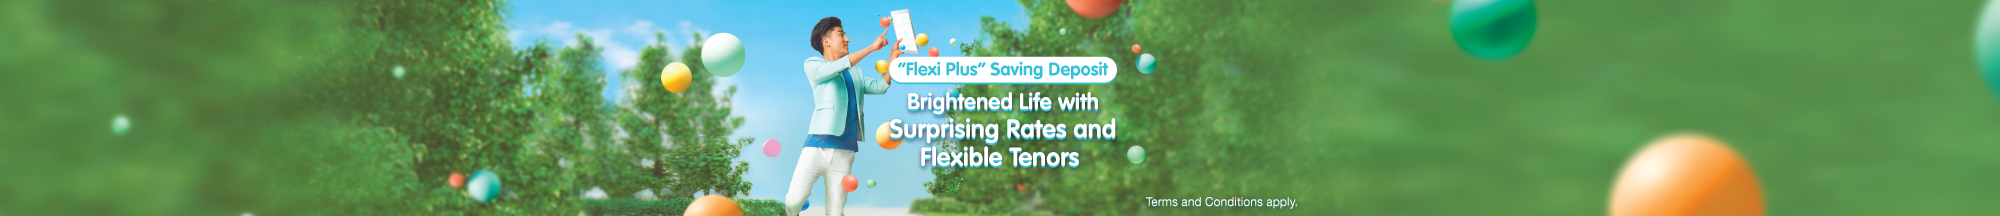 Flexi Plus” Savings Deposit